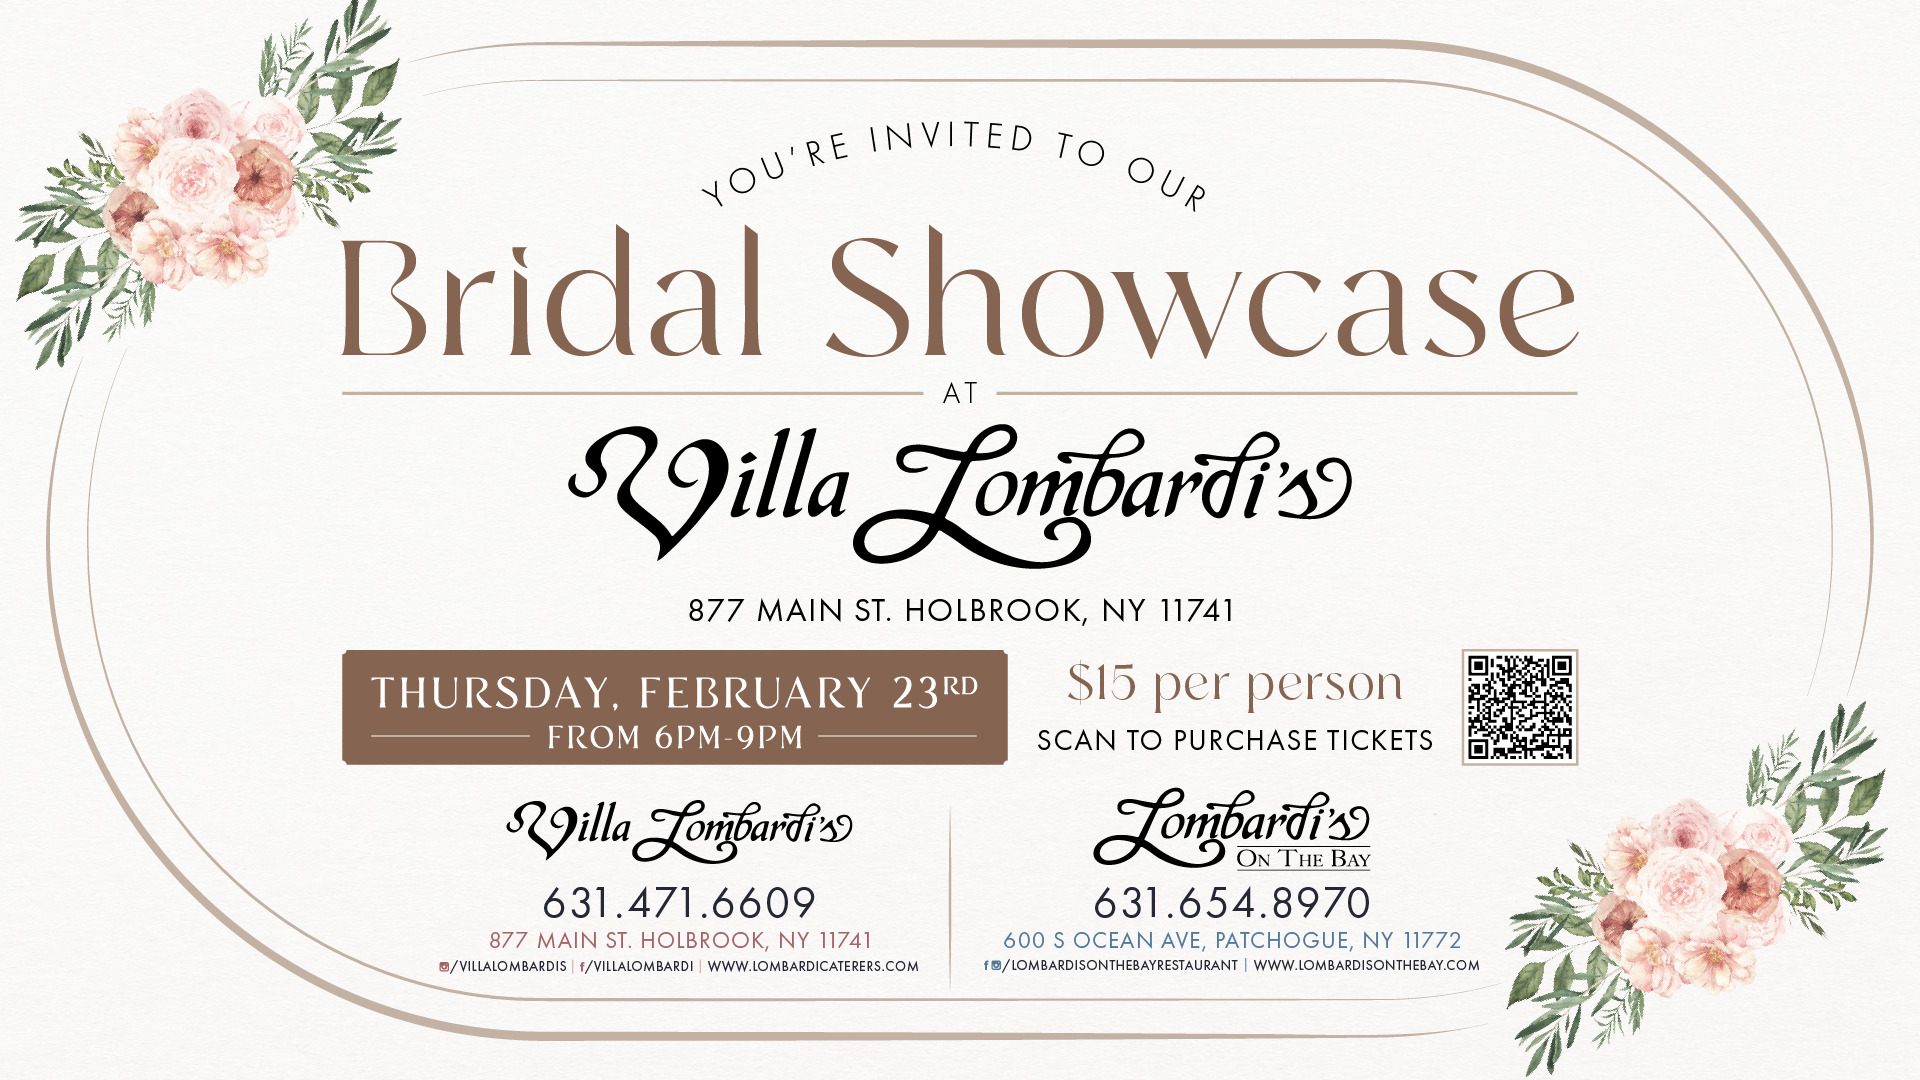 Lombardi’s Caterers Bridal Showcase